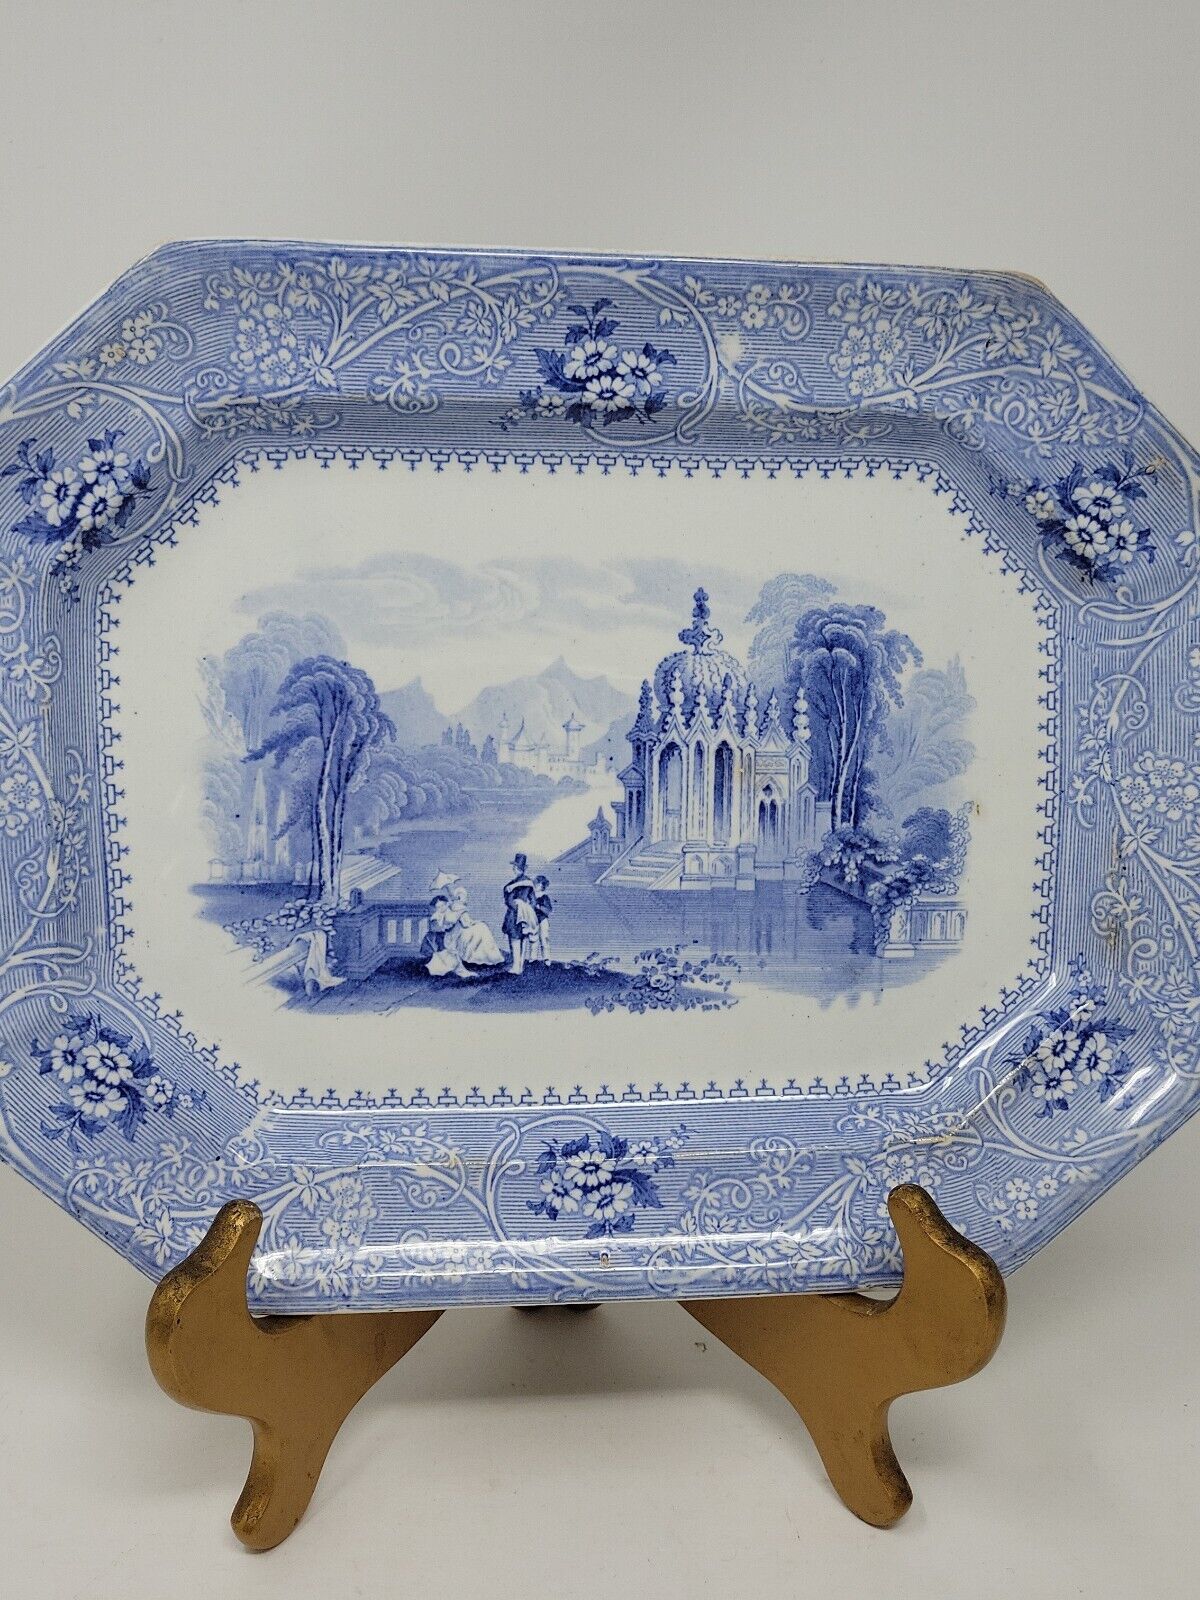 W. Adams & Sons Ironstone Platter Columbia Blue & White Transferware Mid 1800s 